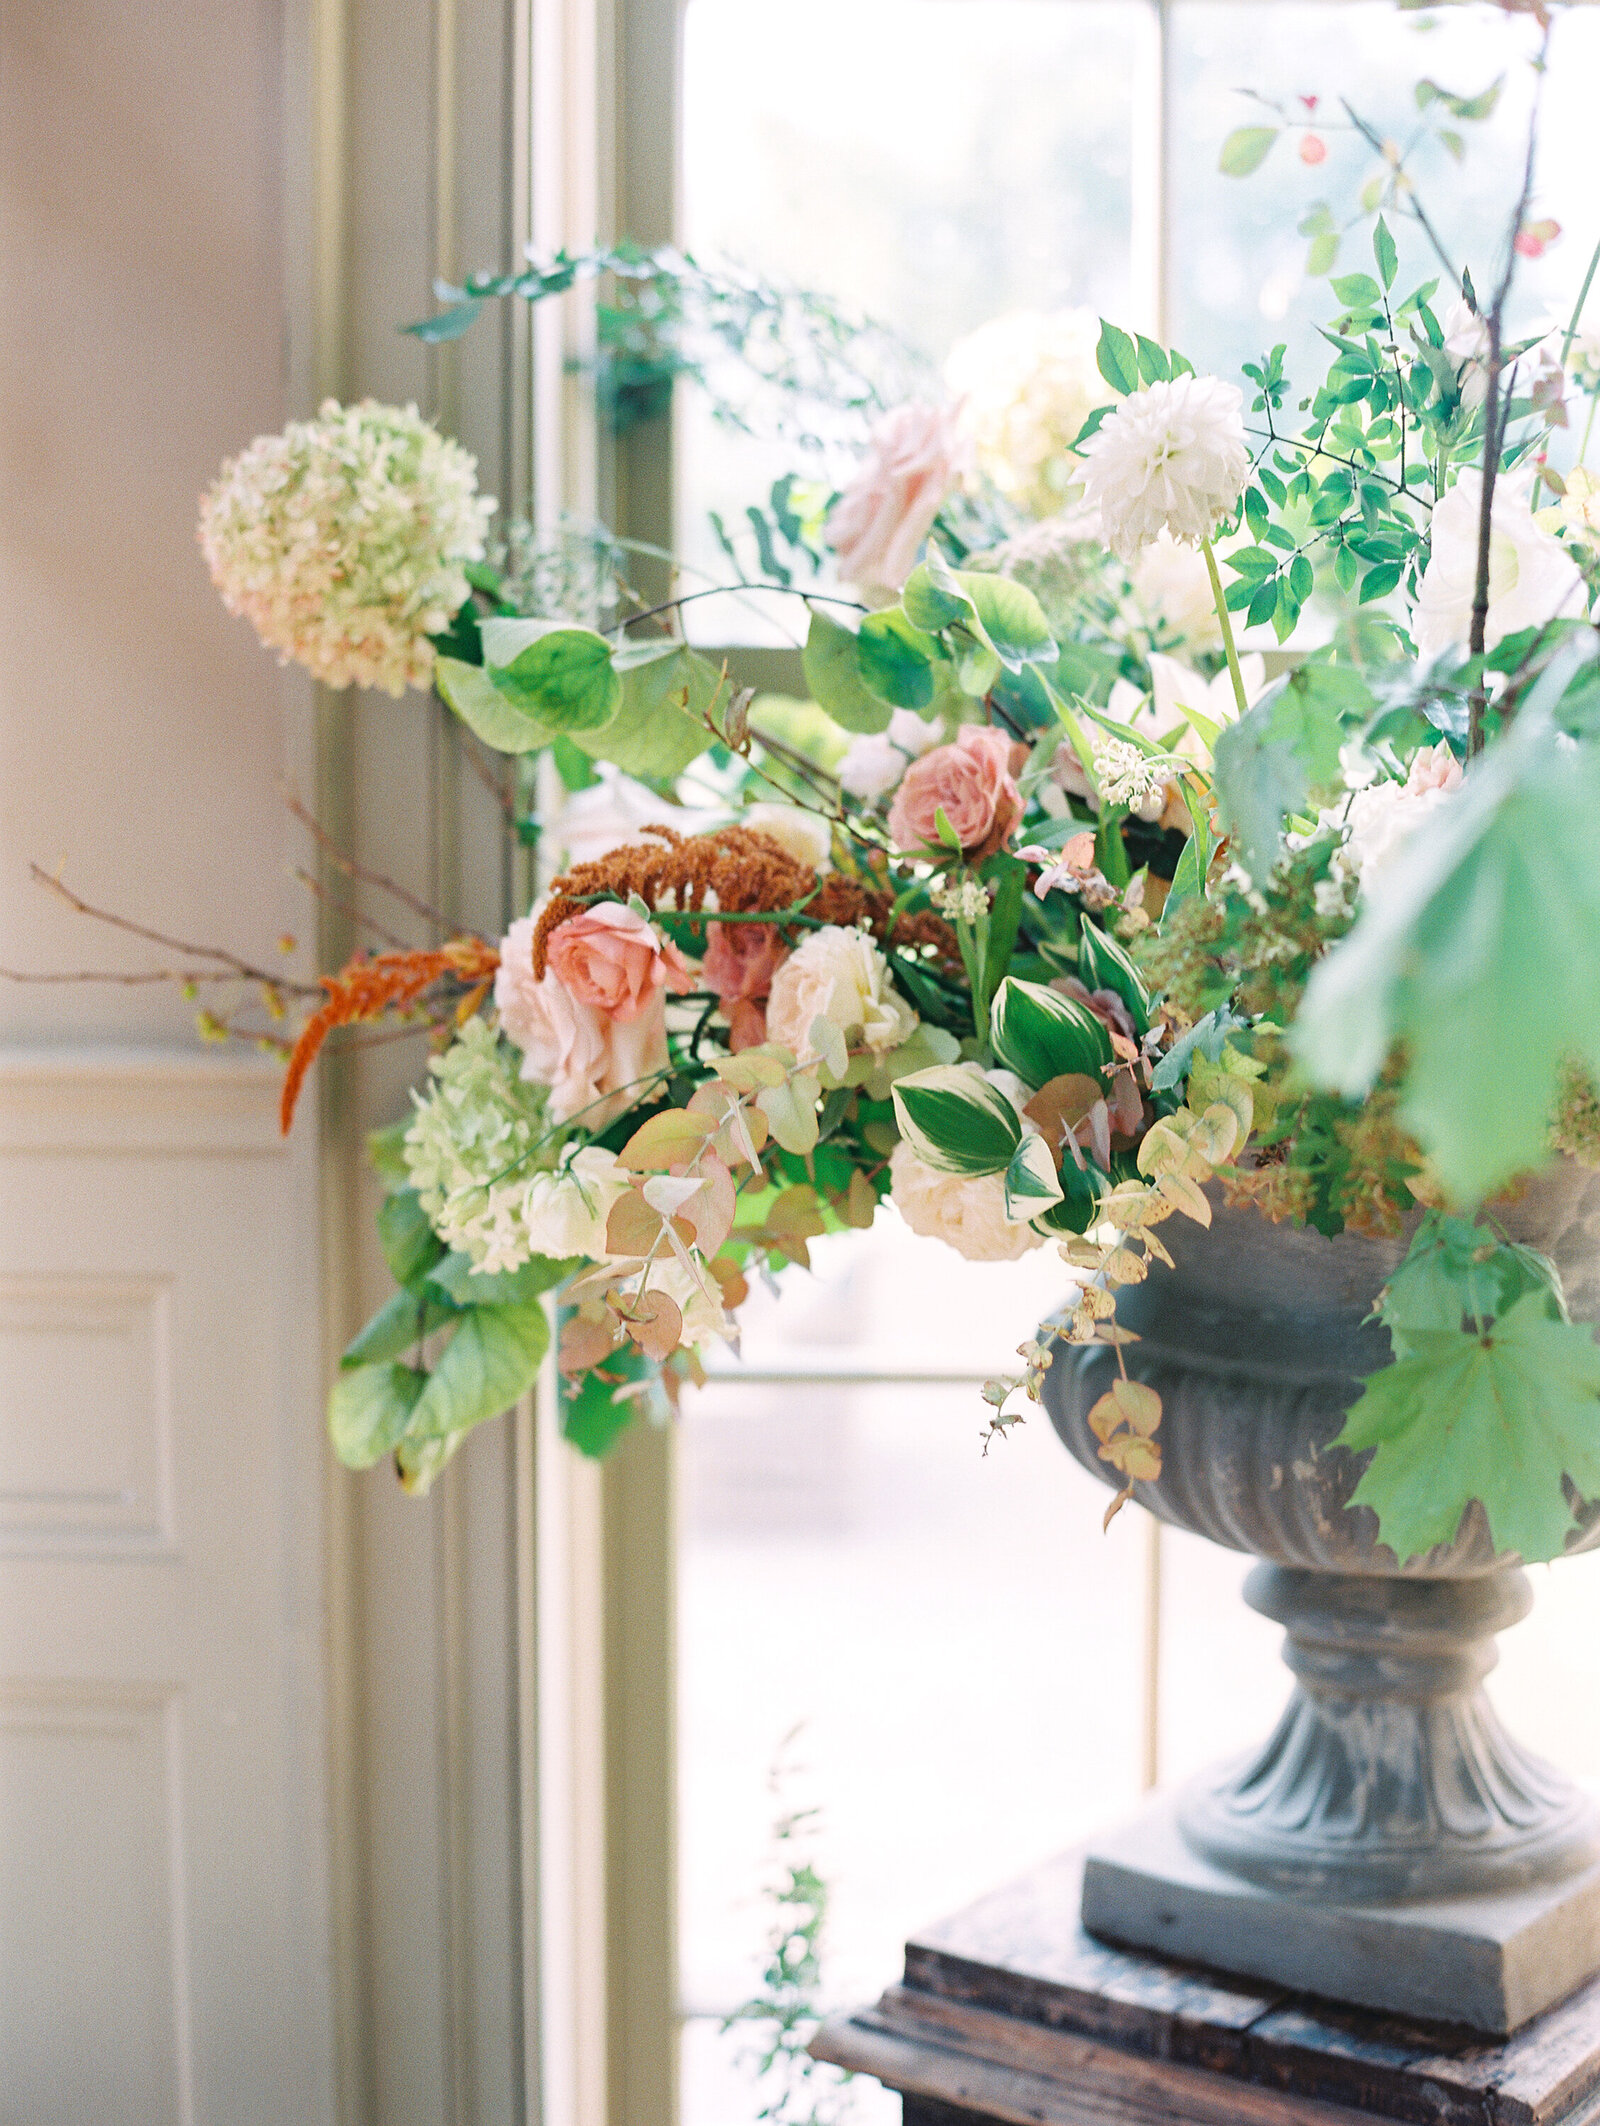 max-owens-design-at-home-floral-arrangements-26-urn-library